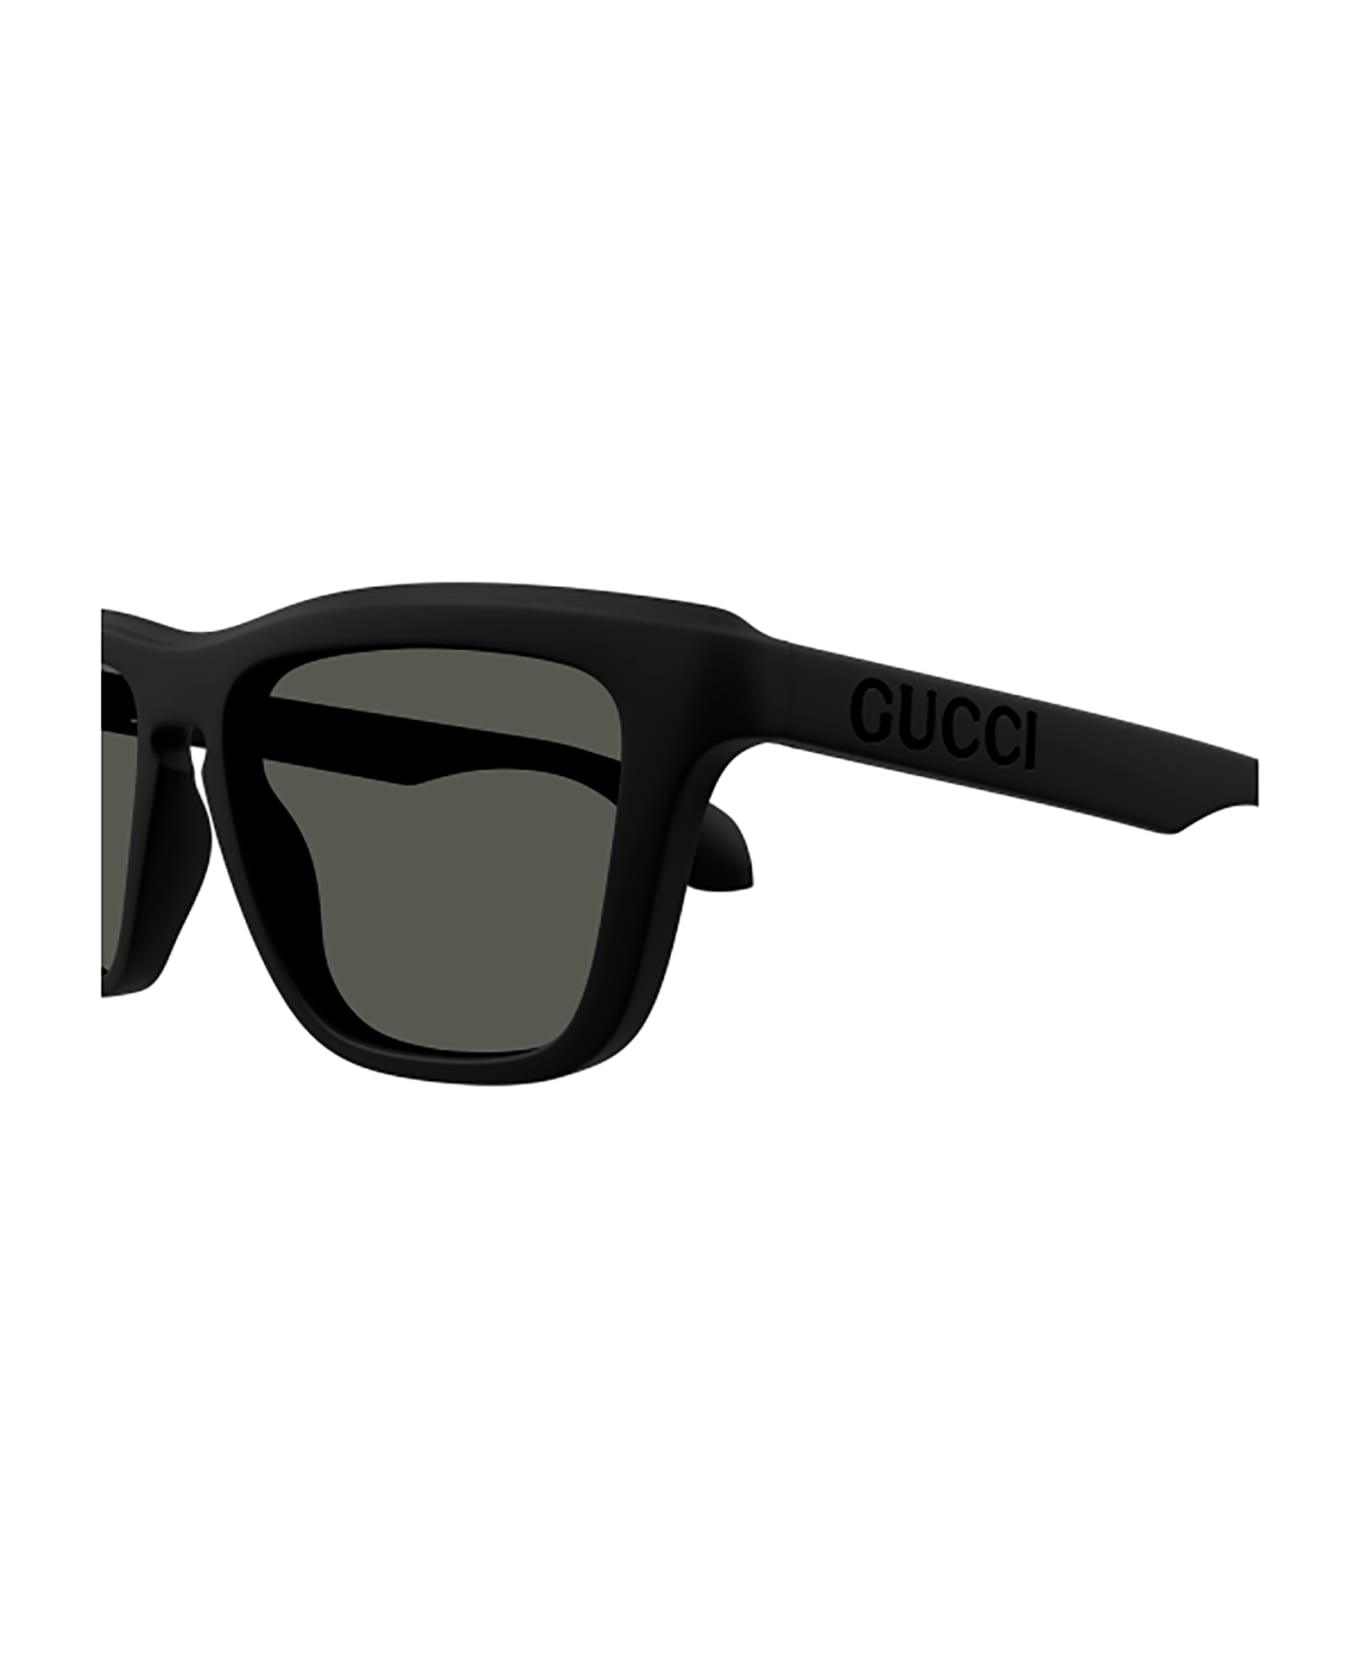 Gucci Eyewear GG1571S Sunglasses - Black Black Grey